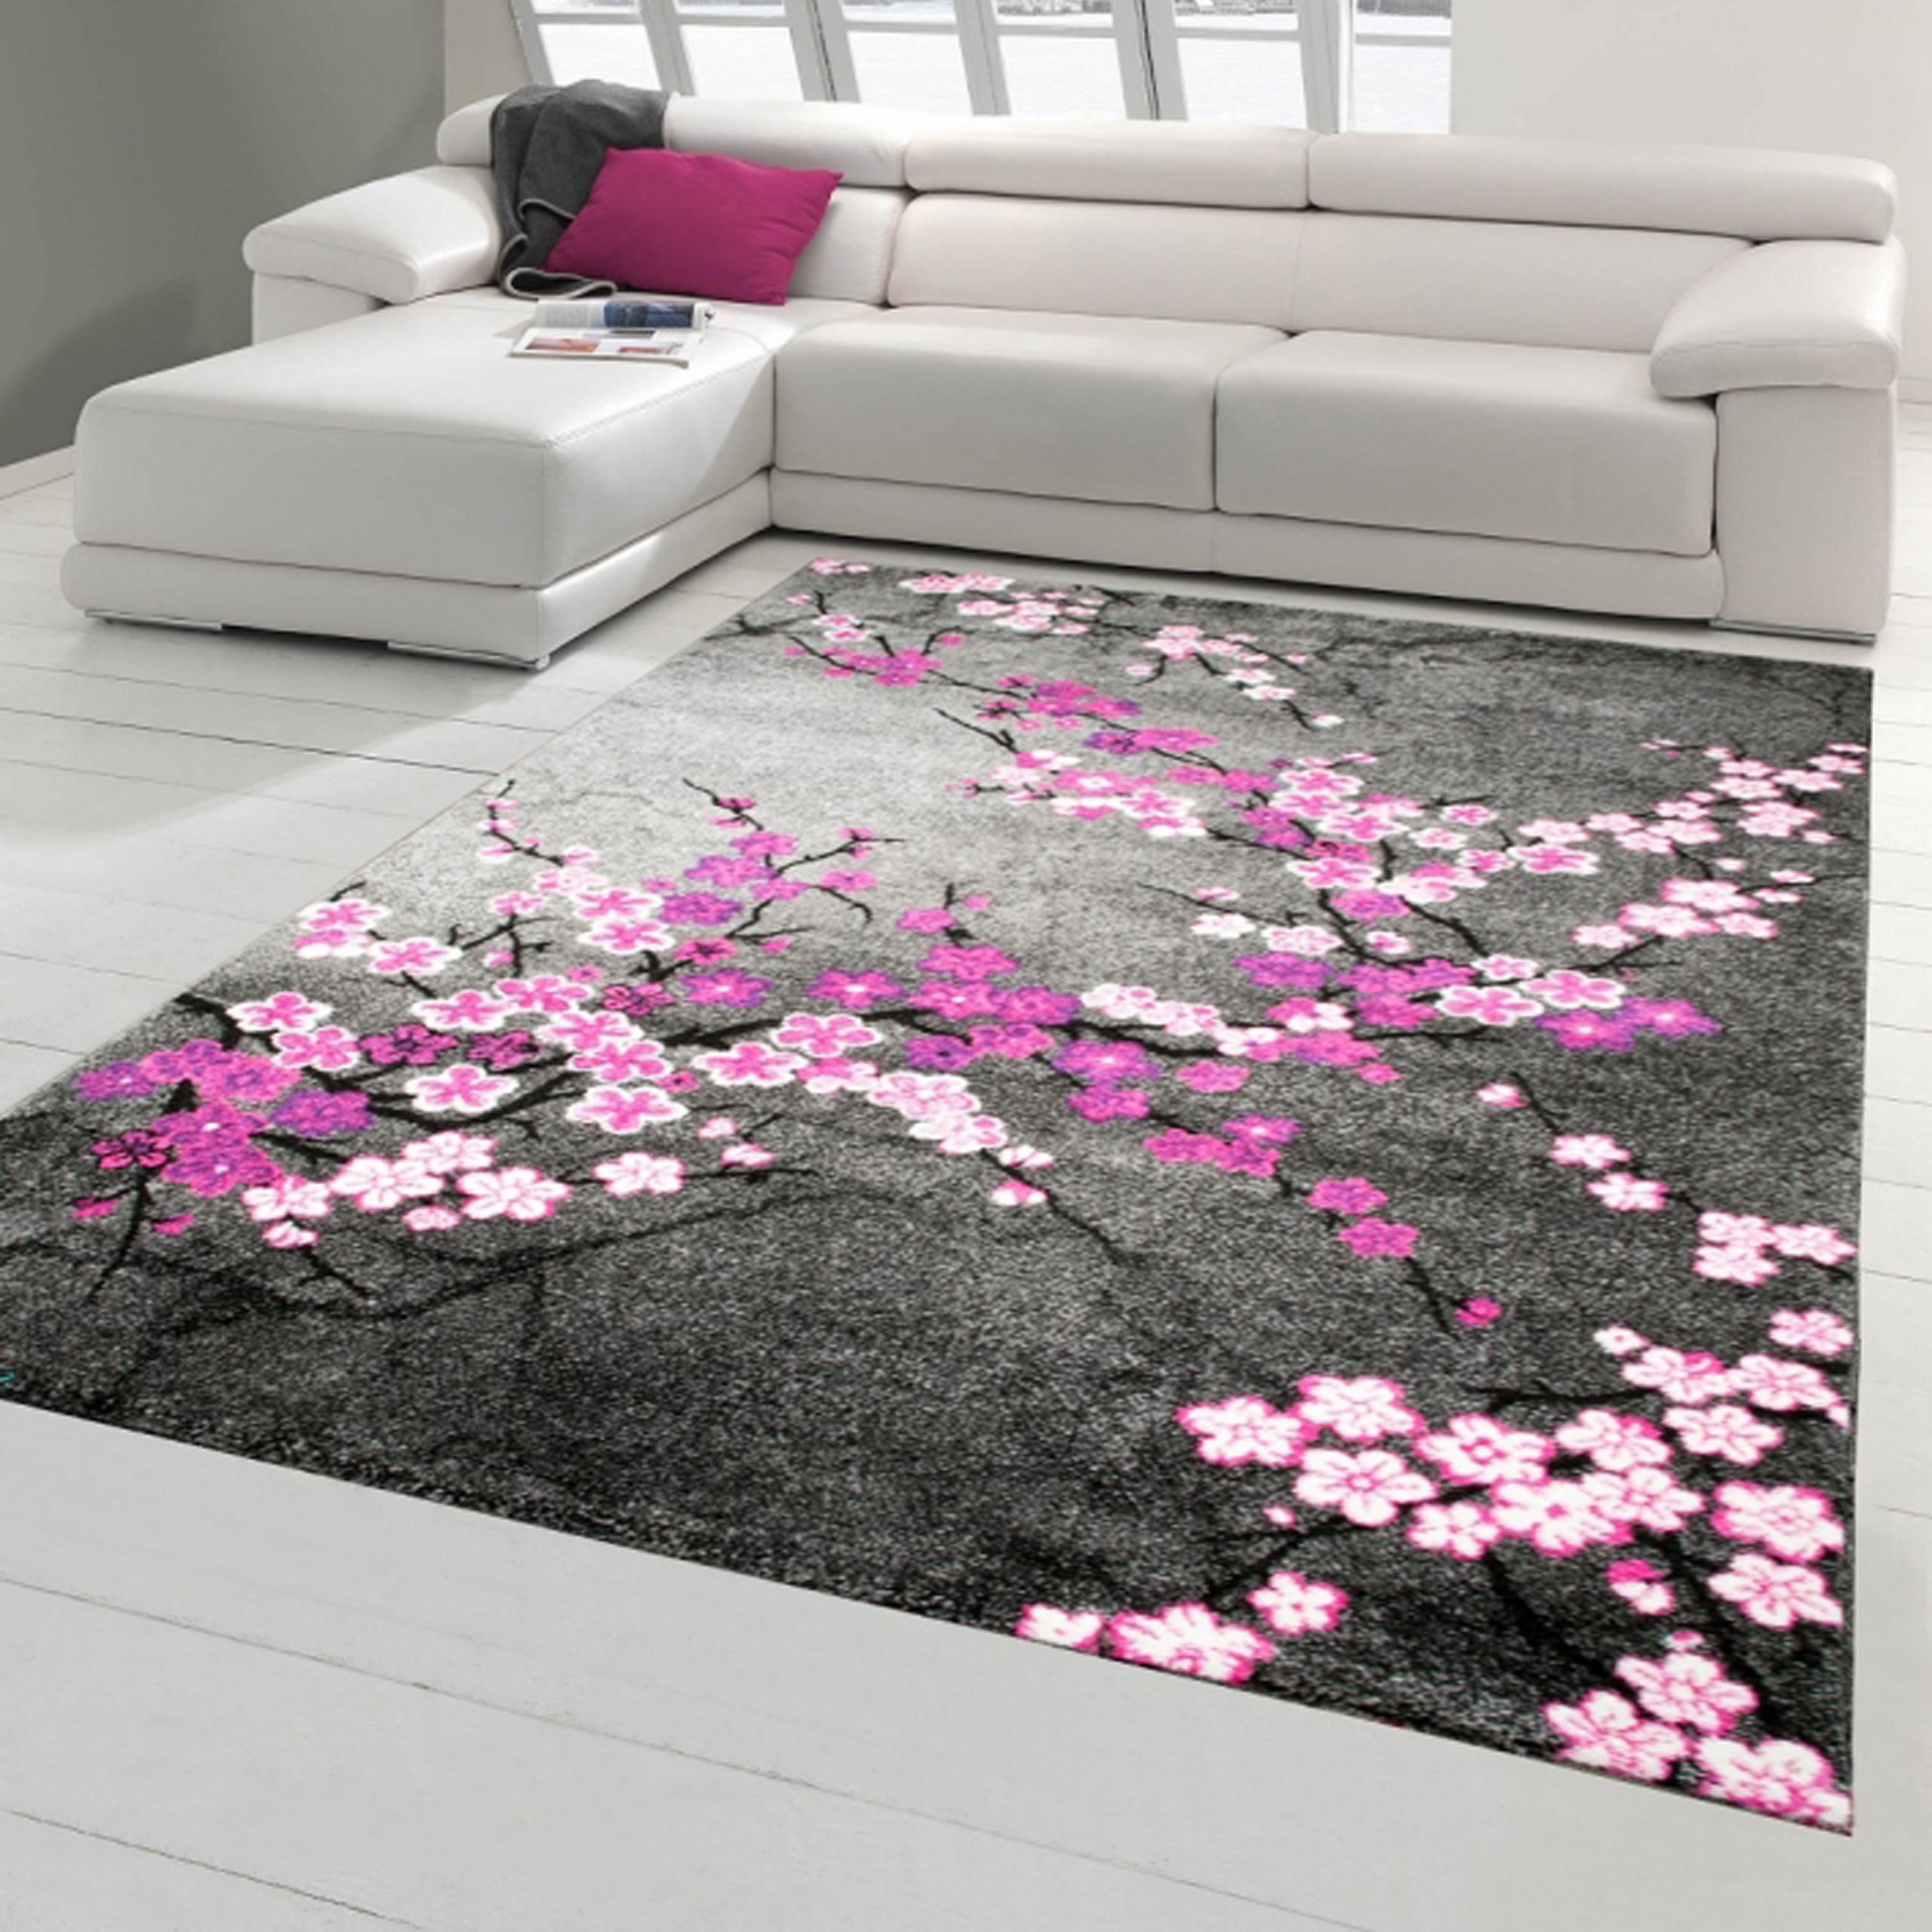 dreams cheap at - -Traum & and carpets: High-quality Modern Teppich carpet designer